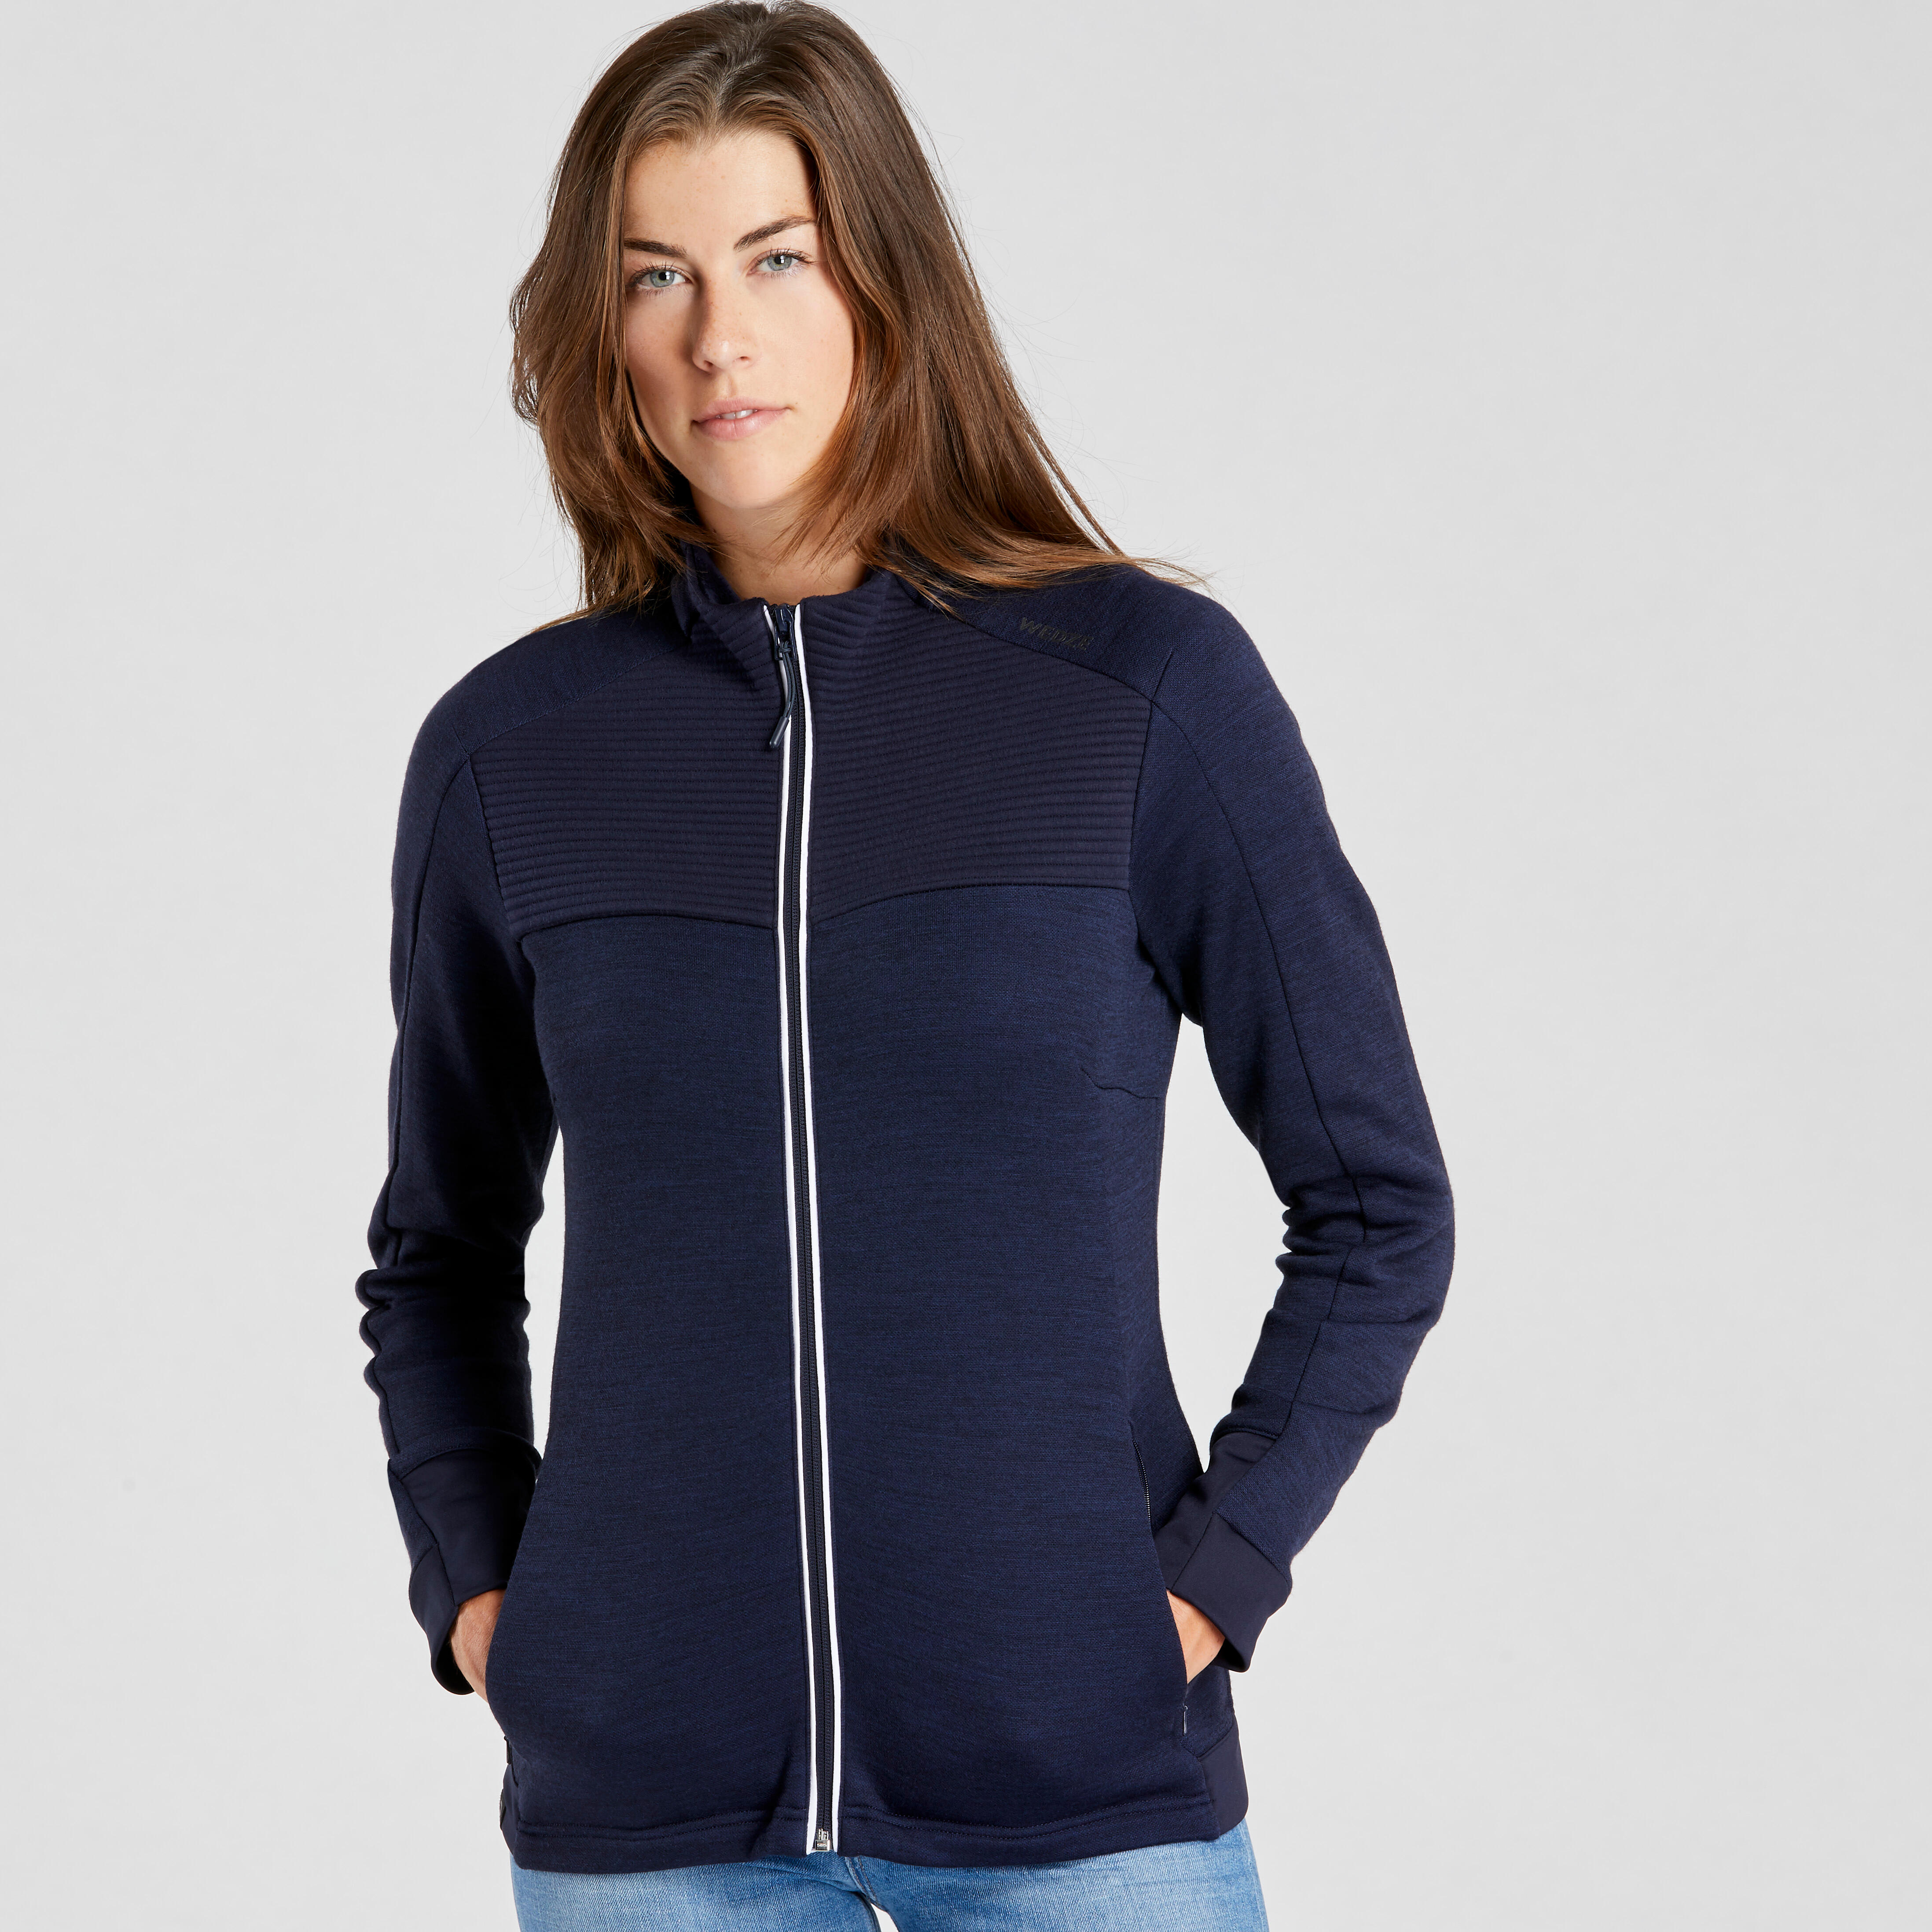 Women's Merino Wool Fleece - Ski Warm 500 Blue - Asphalt blue, Snow white -  Wedze - Decathlon